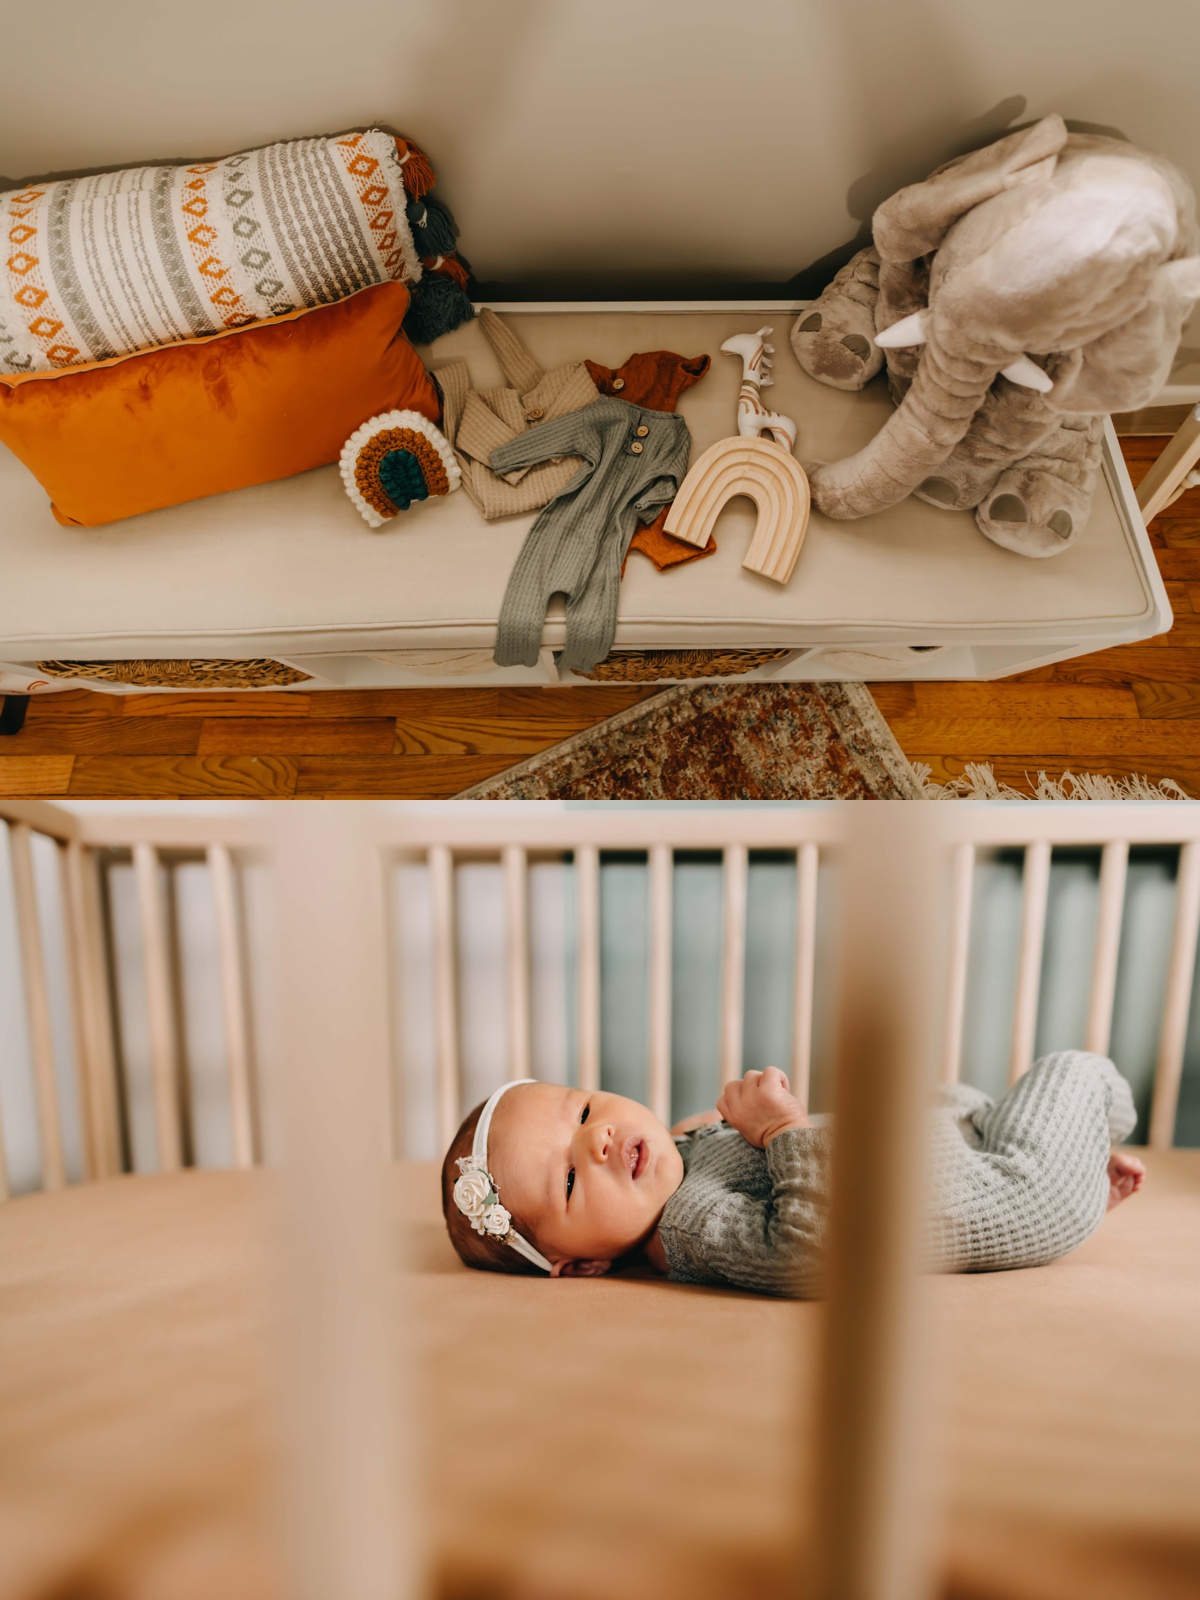 Photos of a newborn baby girl in her crib